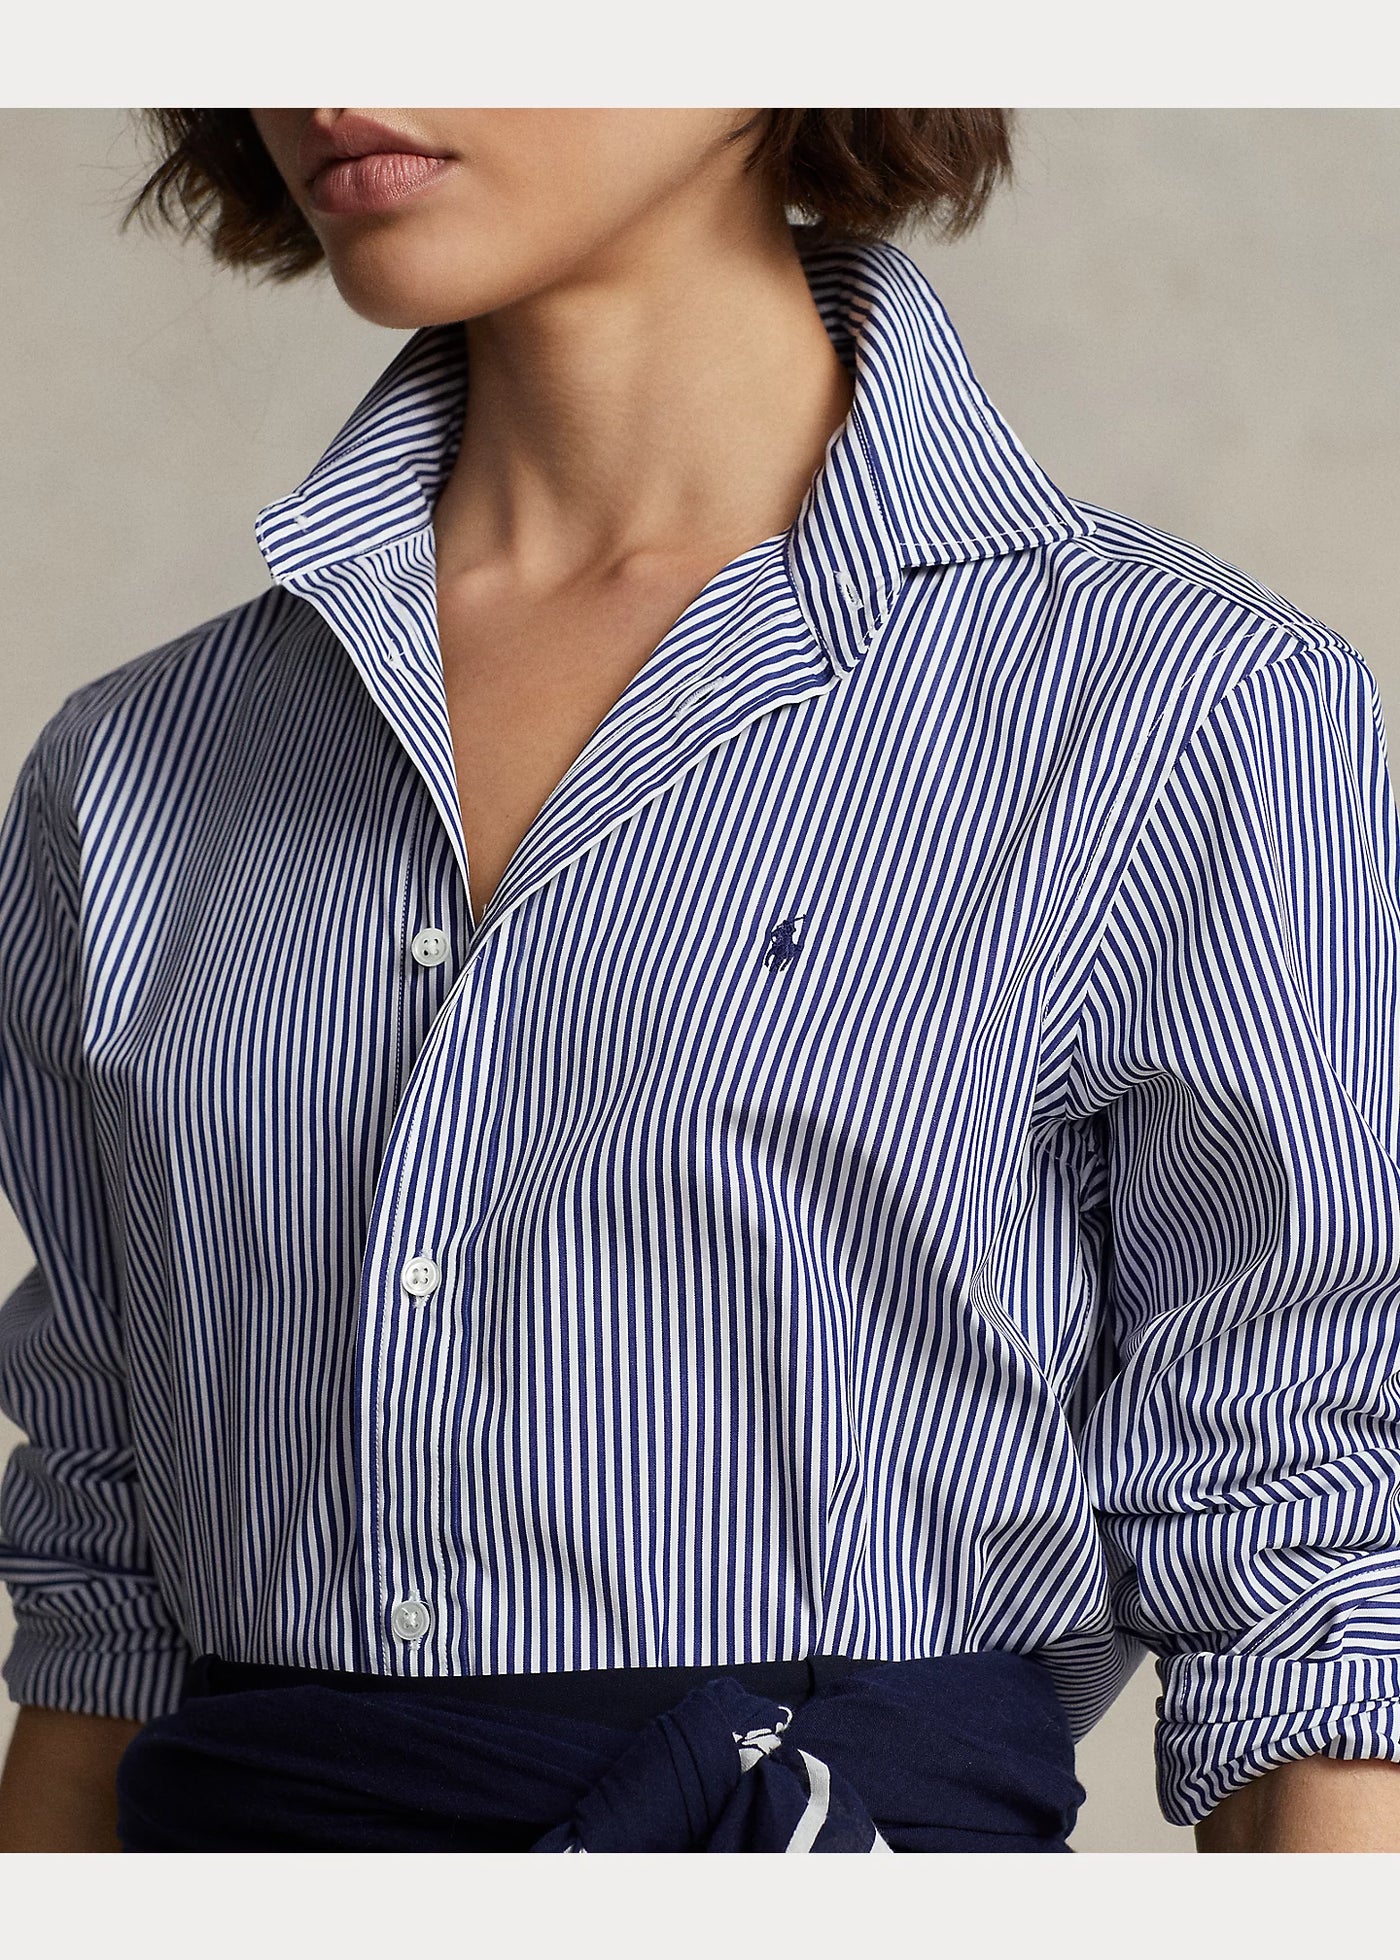 Ralph Lauren Classic Fit Striped Cotton Shirt | White/Royal